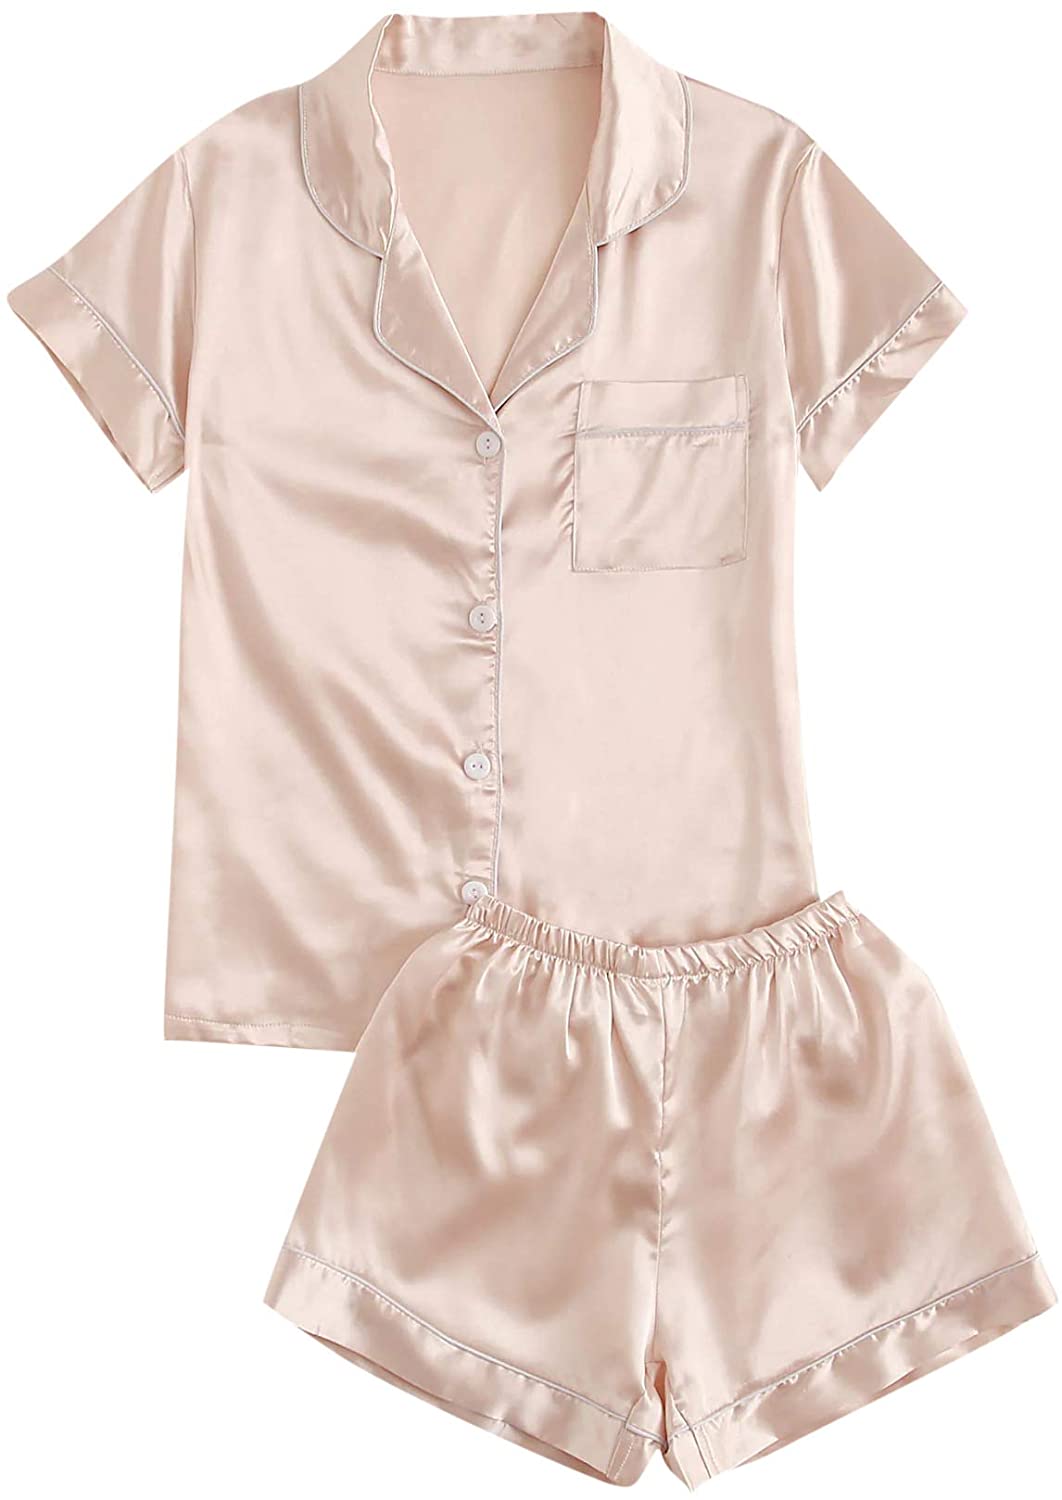 Details about   SweatyRocks Women's Short Sleeve Sleepwear Button Down Satin 2 Piece Pajama Set 